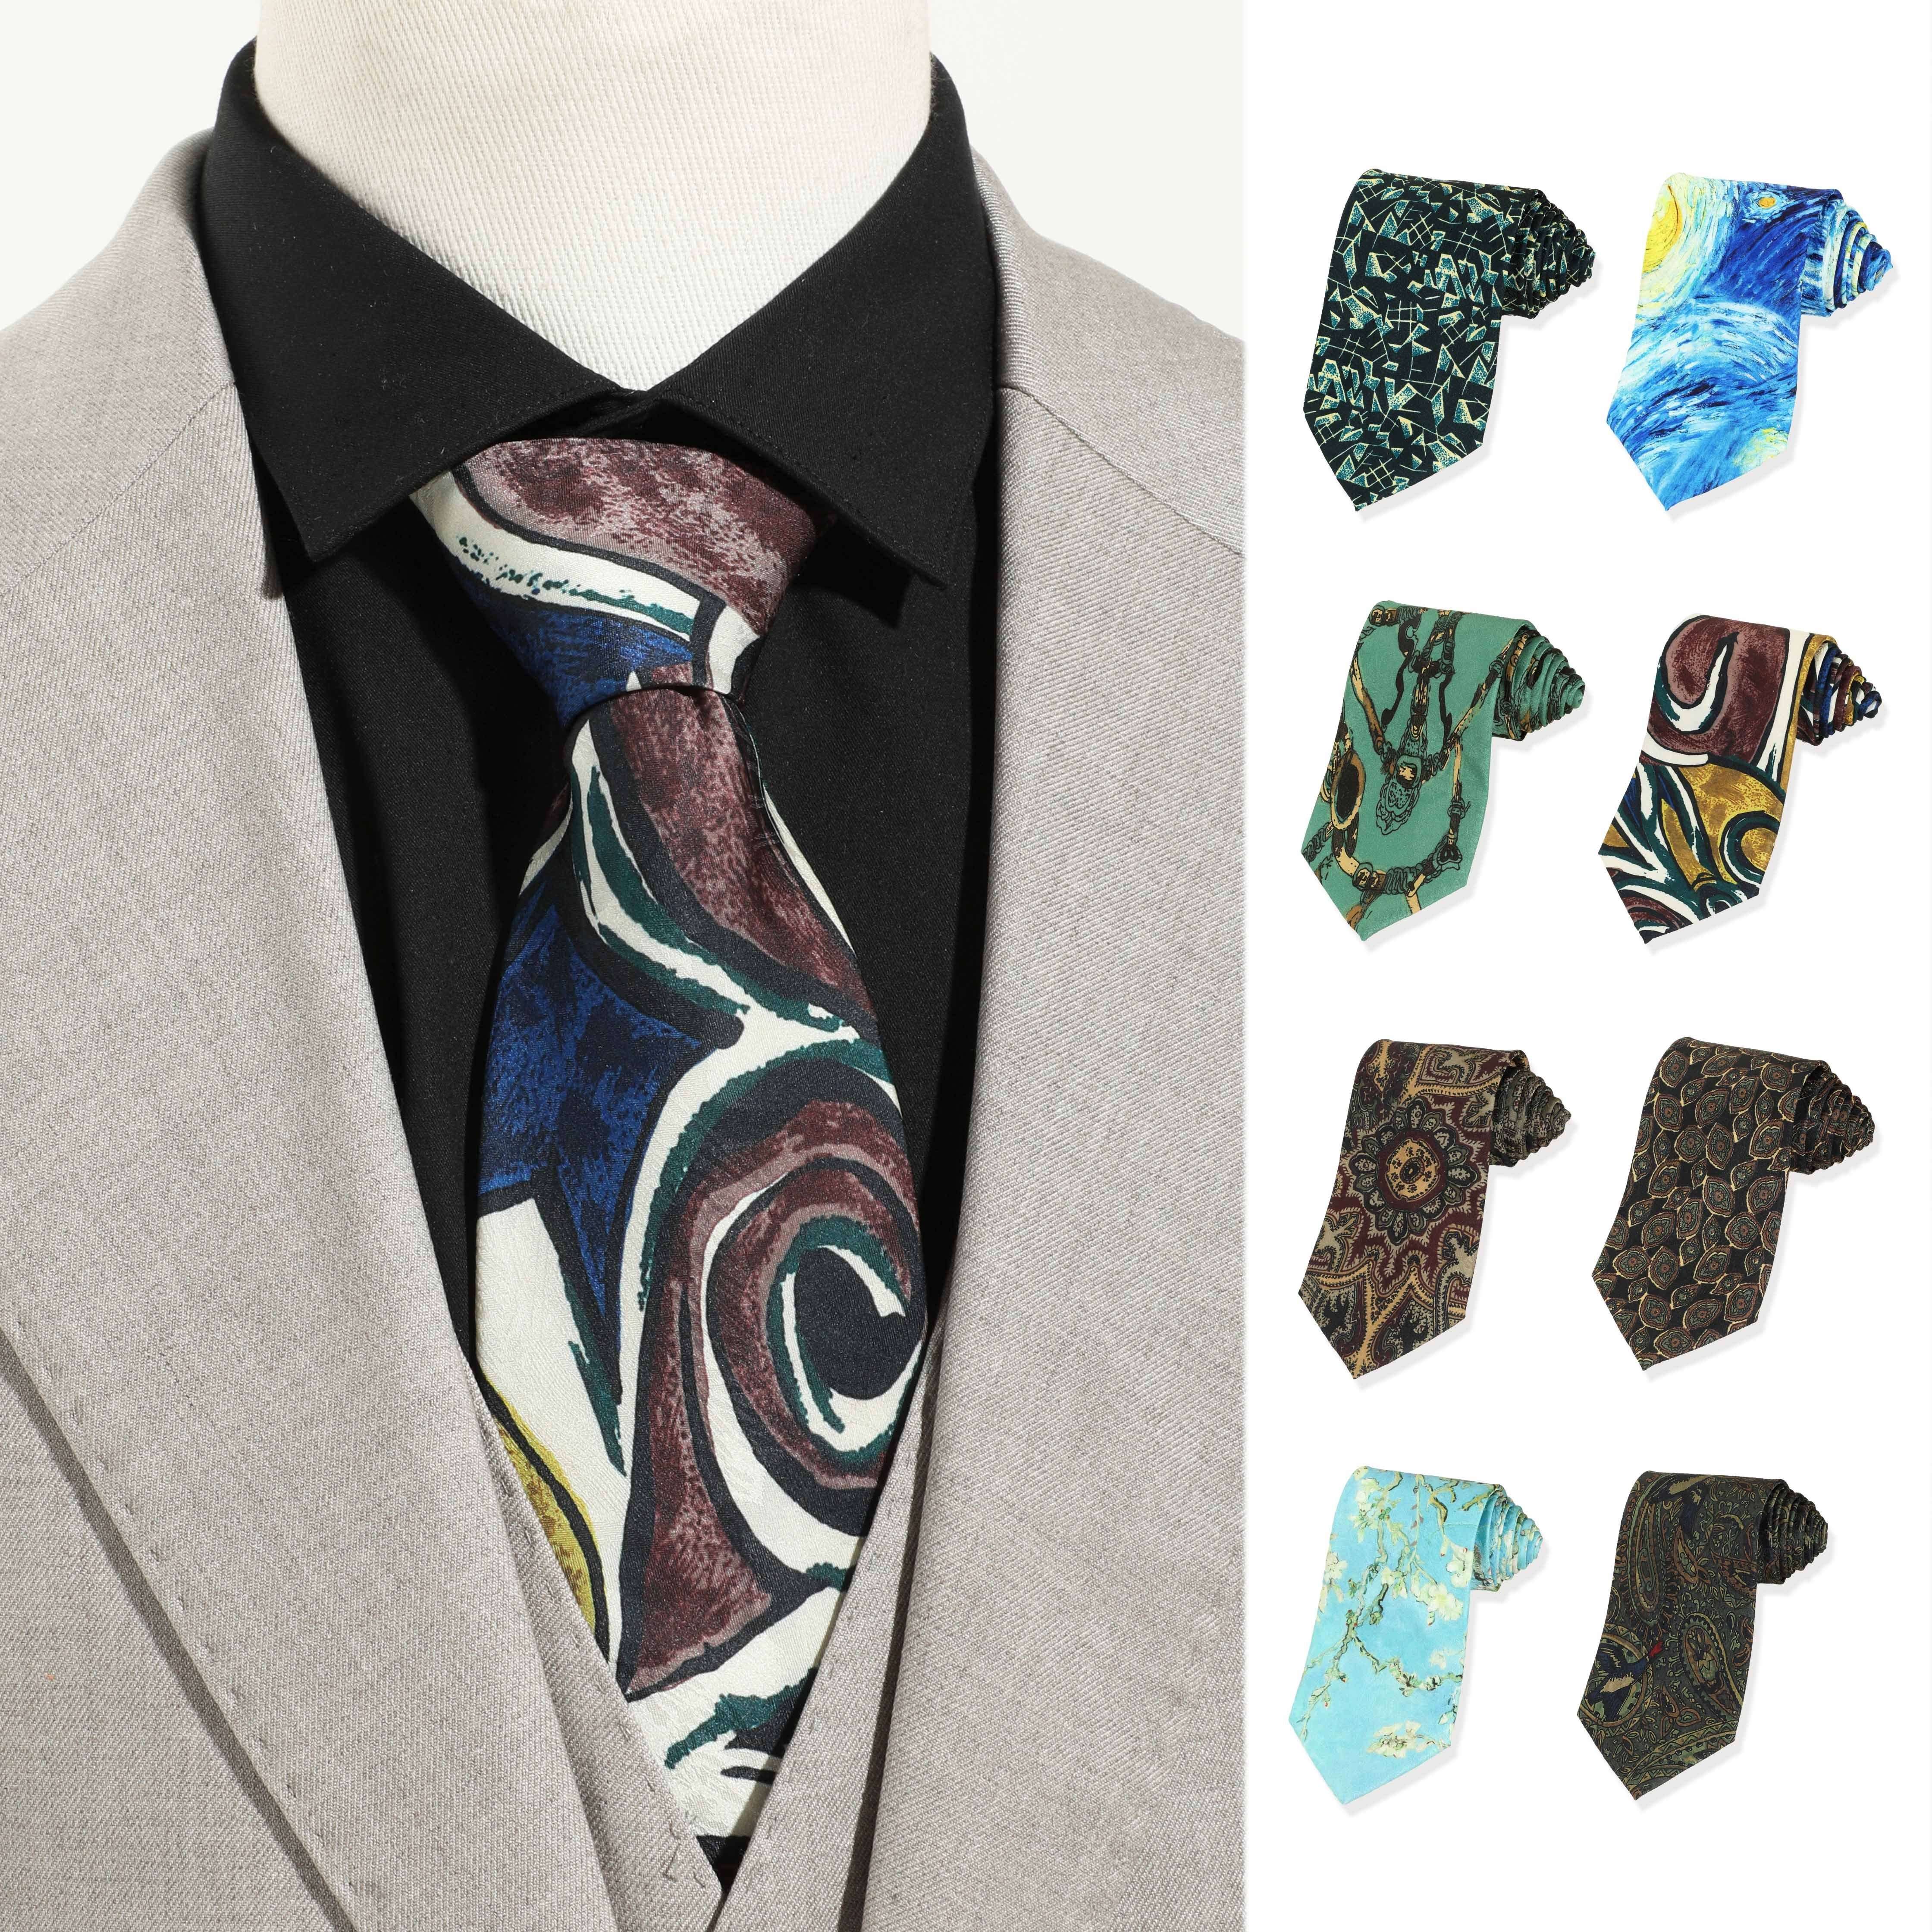 Led Necktie Adjustable Light Tie Novelty Necktie Party - Temu